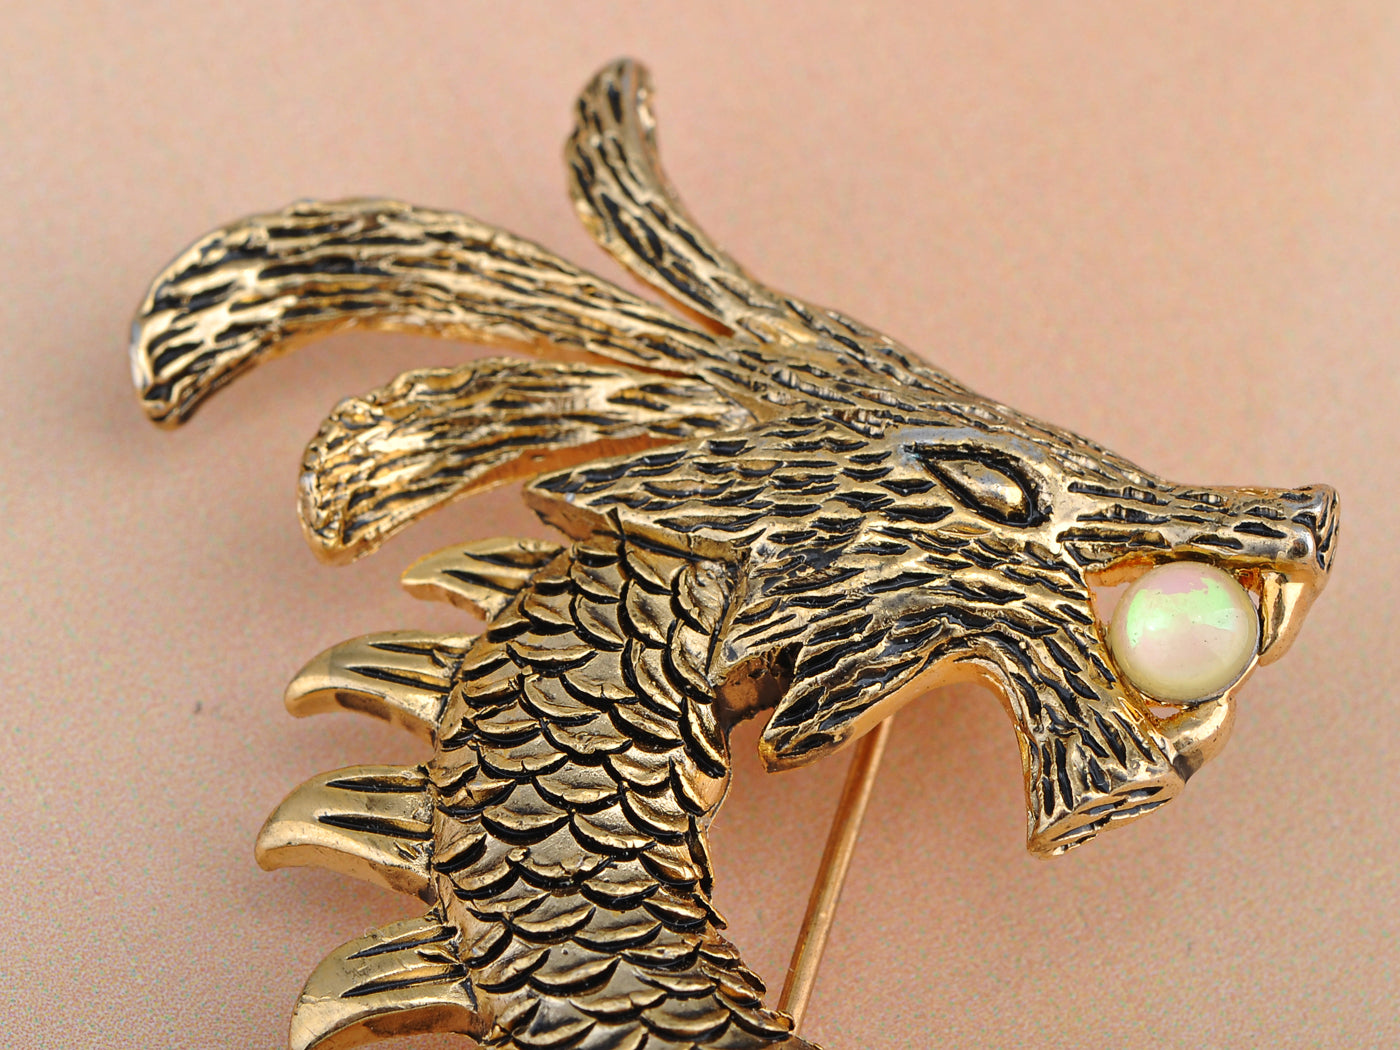 Gold Pearl Ancient Zodiac Dragon Monster Brooch Pin